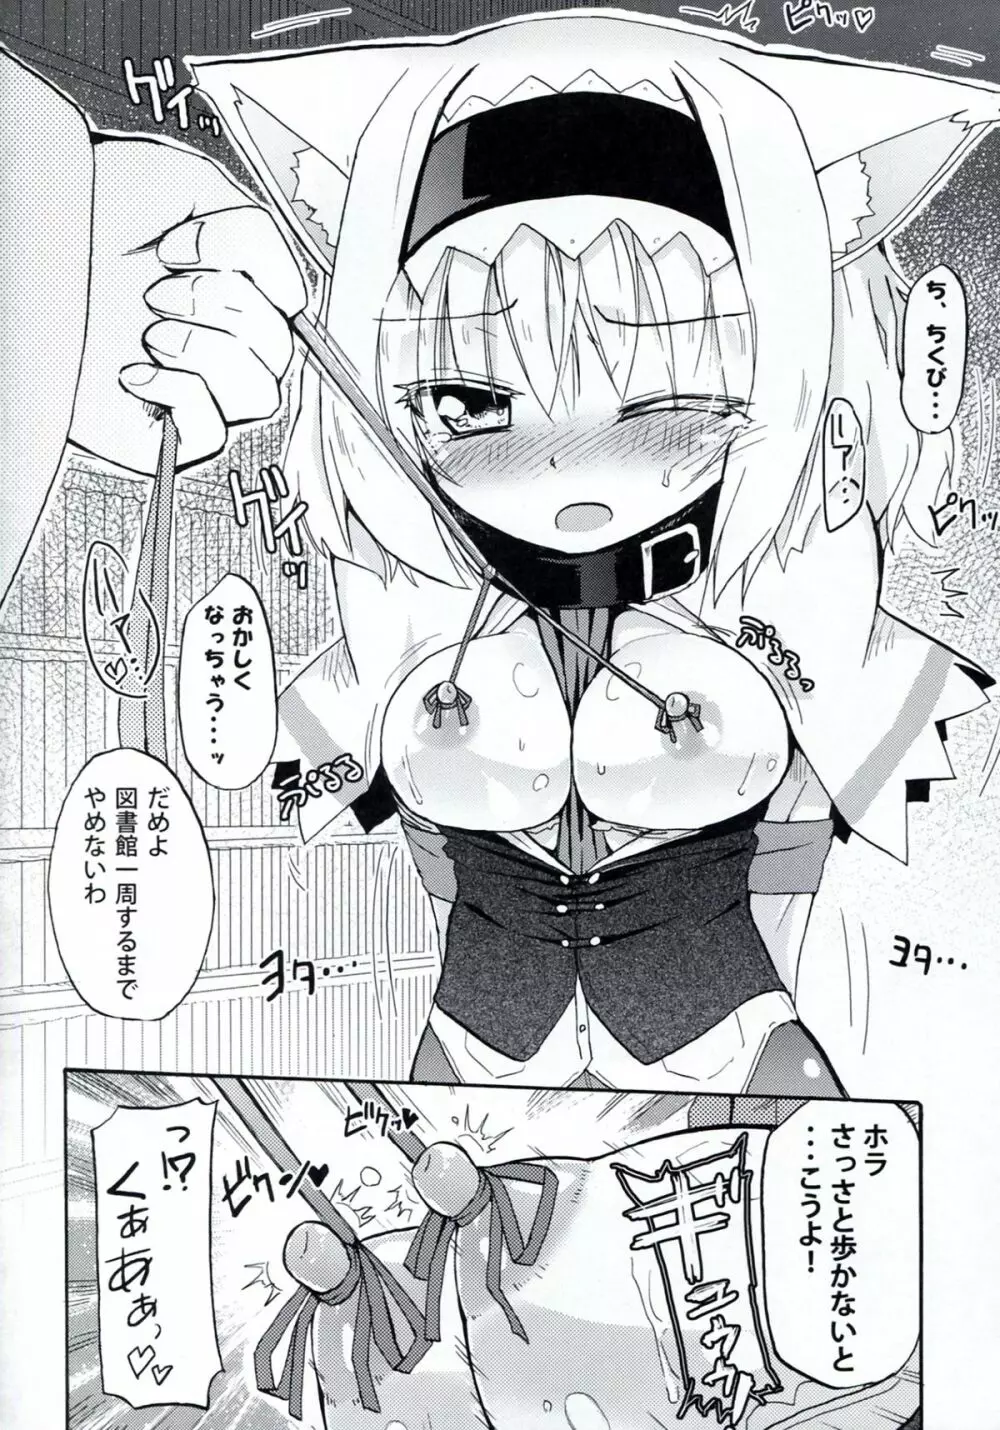 Homuraya Milk ★ Collection 2 - page10